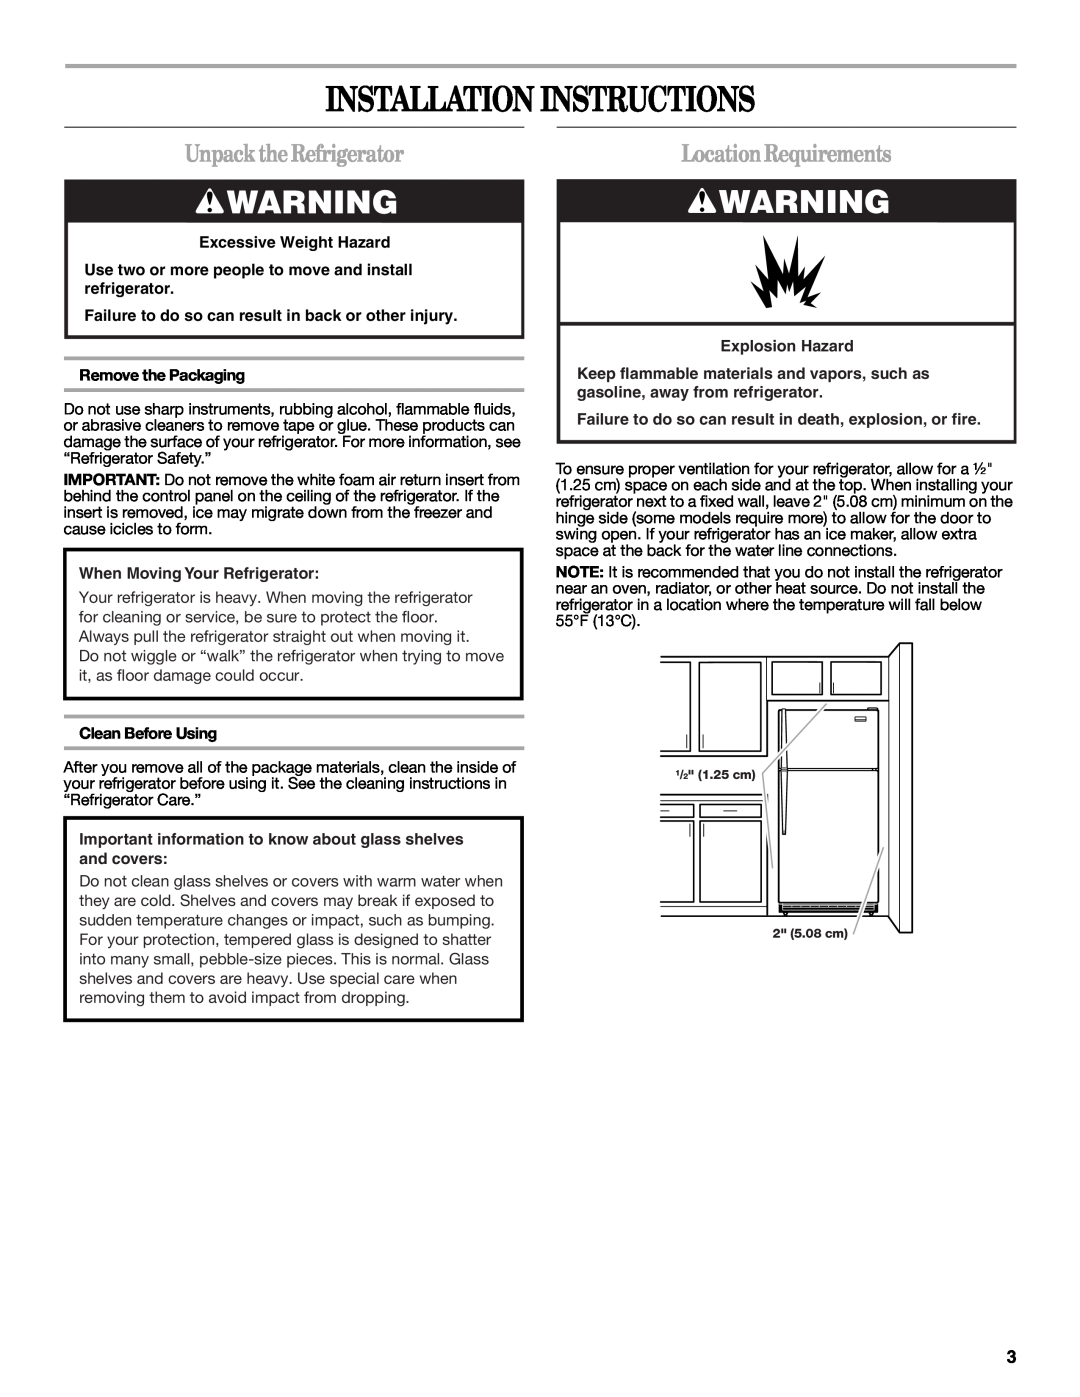 Whirlpool GR2SHWXPB02 Installation Instructions, UnpacktheRefrigerator, LocationRequirements, Excessive Weight Hazard 